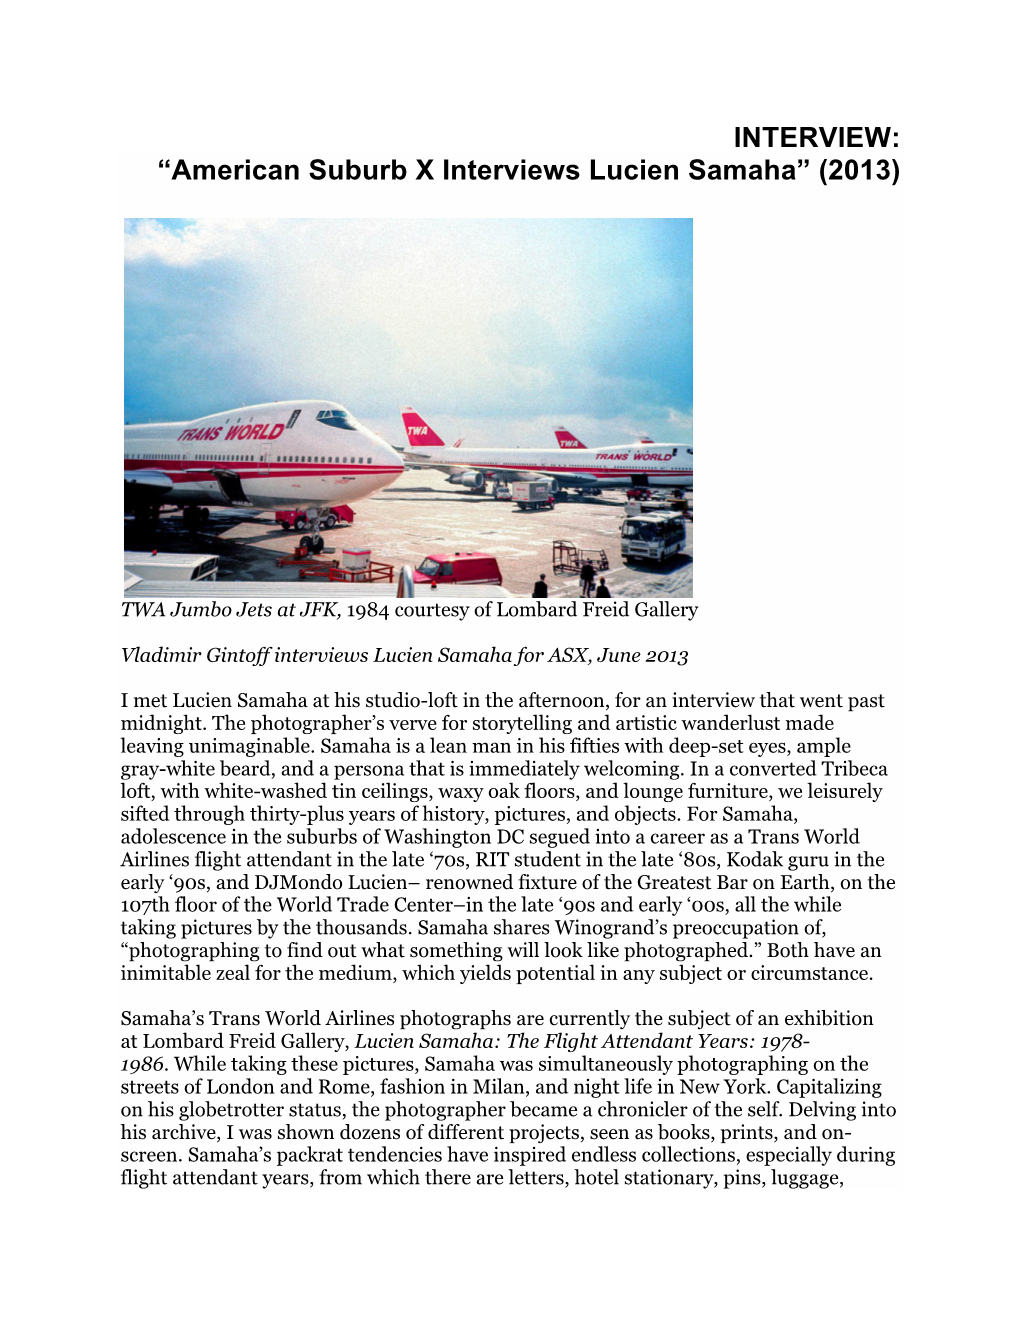 American Suburb X Interviews Lucien Samaha” (2013)